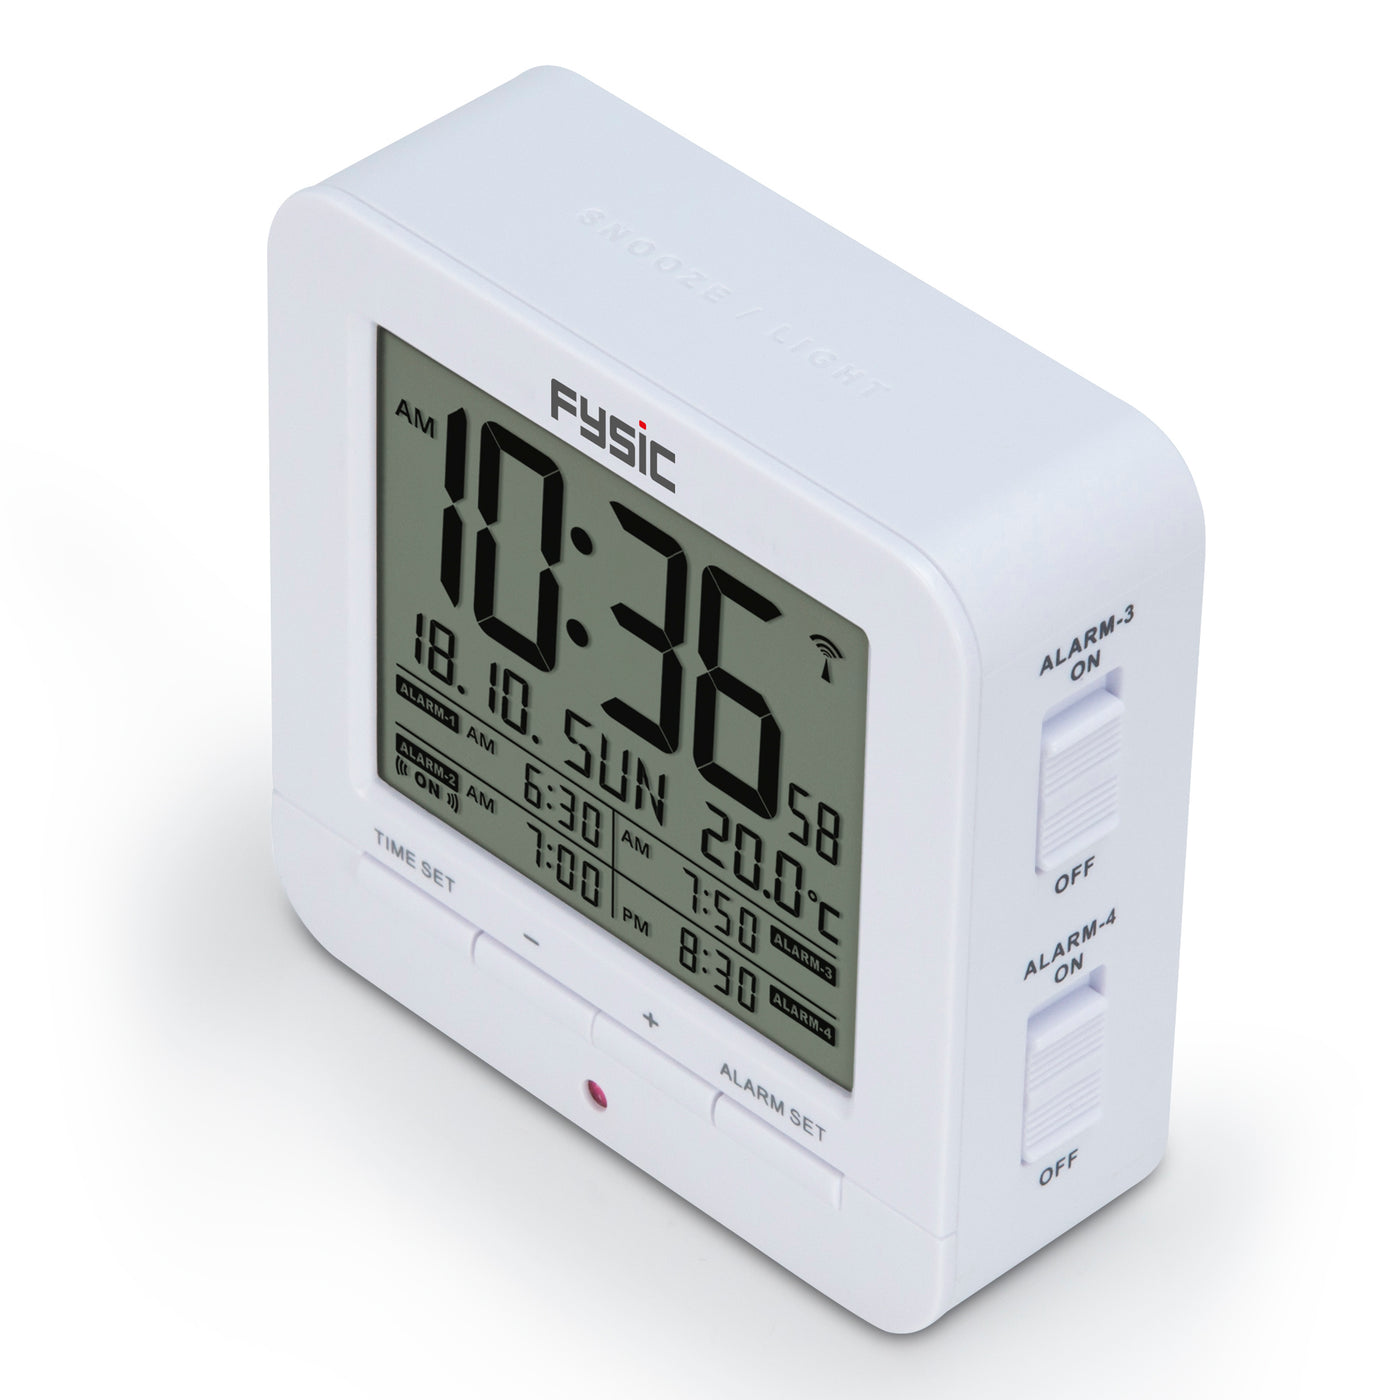 Fysic FKW-8 - Digitale wekker met temperatuurweergave, wit